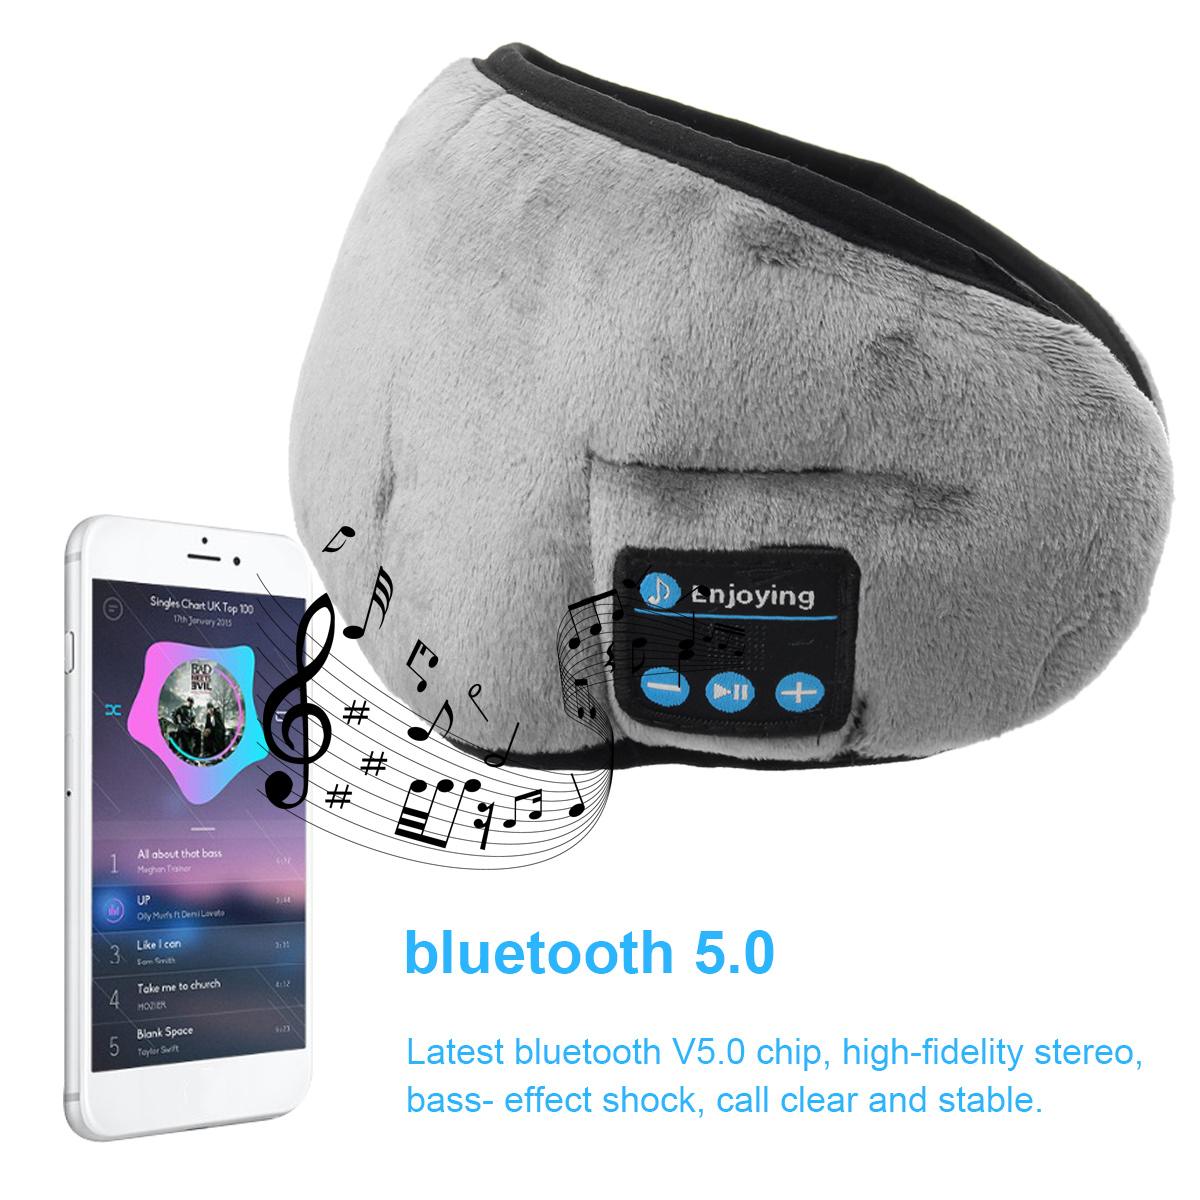 Wireless bluetooth 5.0 Earphones Sleeping Eye Mask Music player / Sports headband Travel Headset Speakers Built-in Speakers Mic